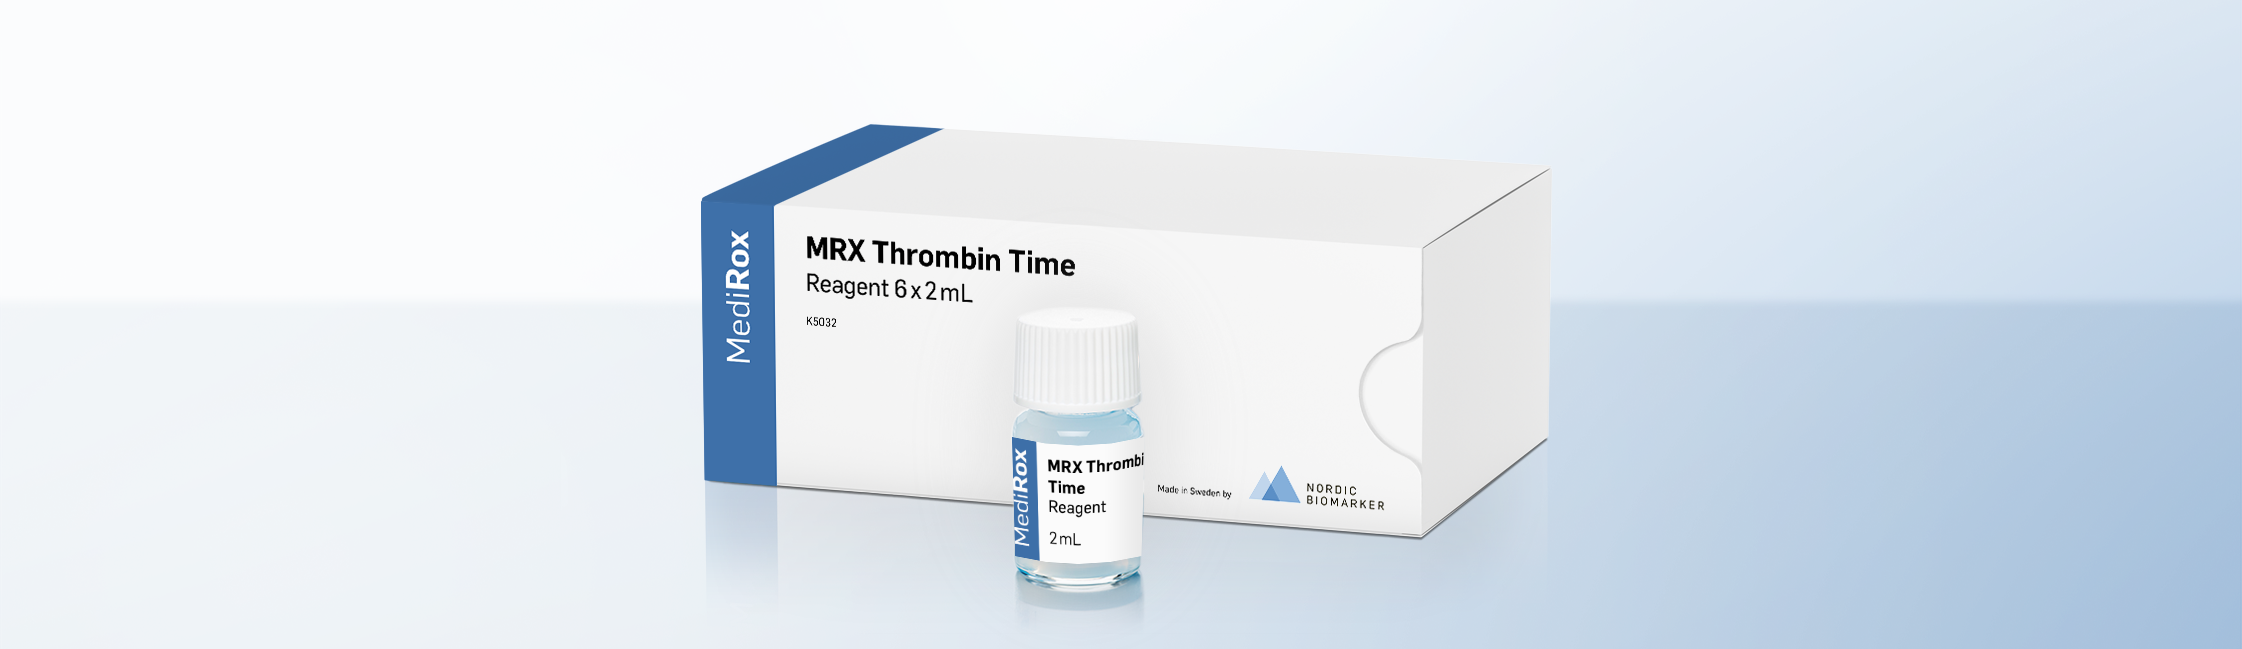 MRX Thrombin Time